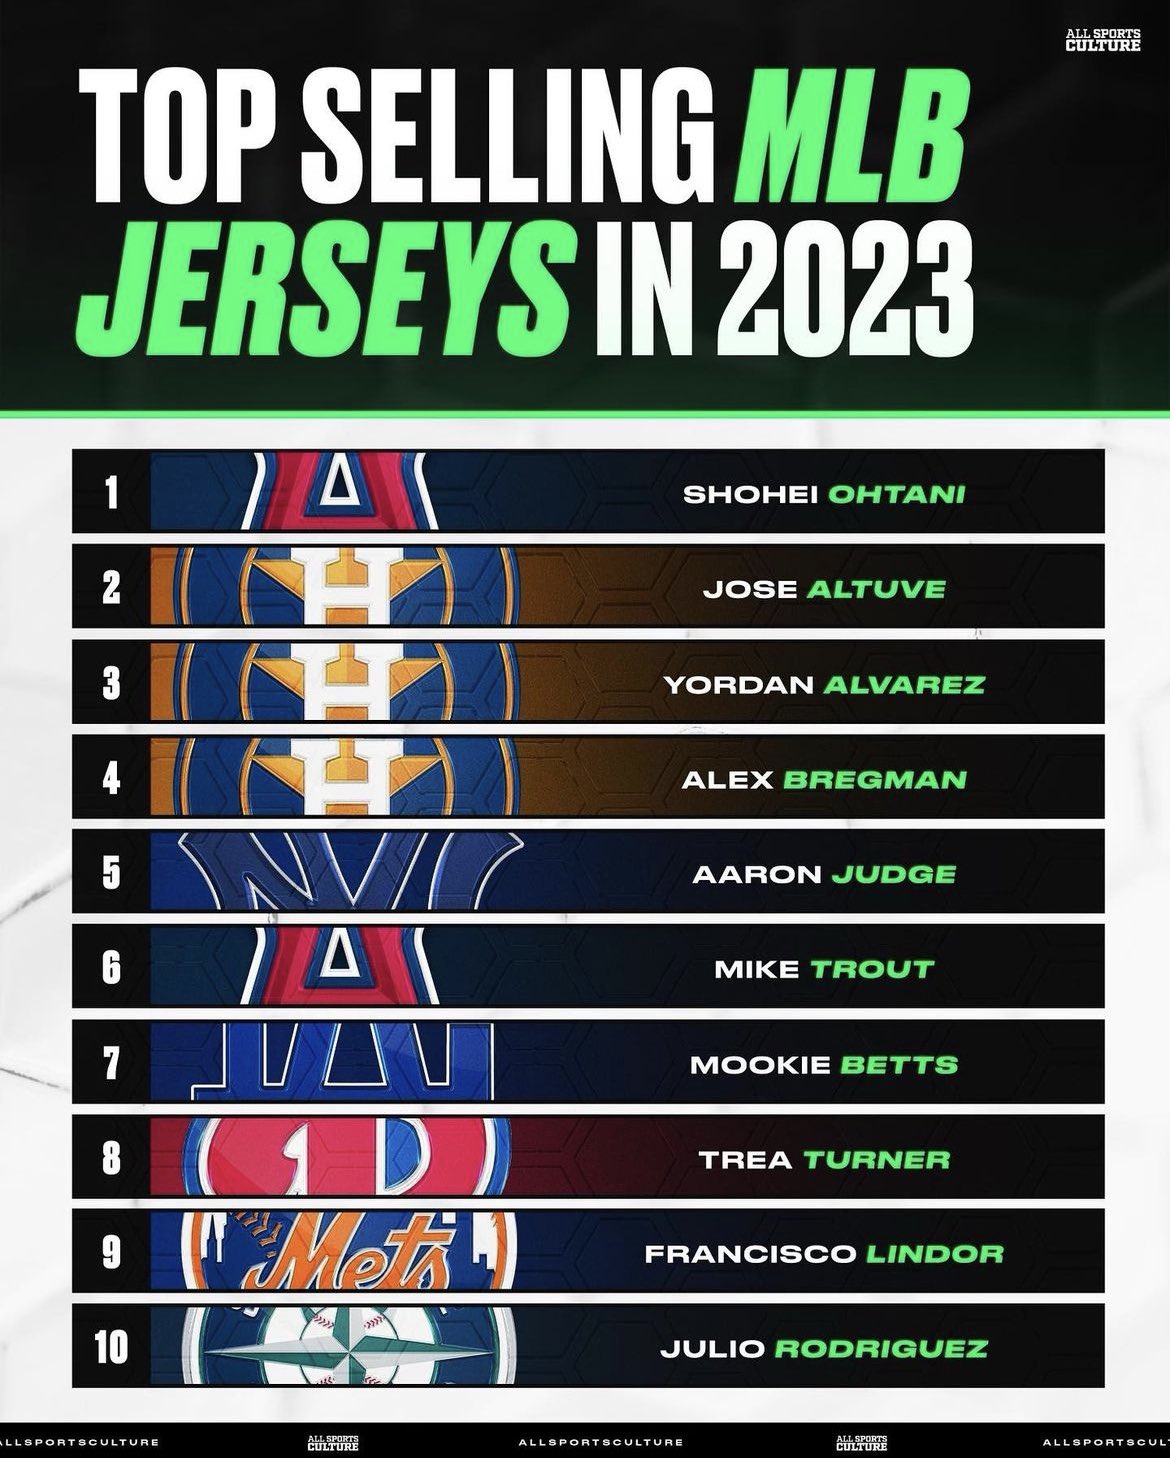 All Sports Culture on X: Top 10 selling MLB jerseys in 2023 1. Angels -  Shohei Ohtani 2. Astros - Altuve 3. Astros - Yordan Alvarez 4. Astros -  Alex Bregman 5.